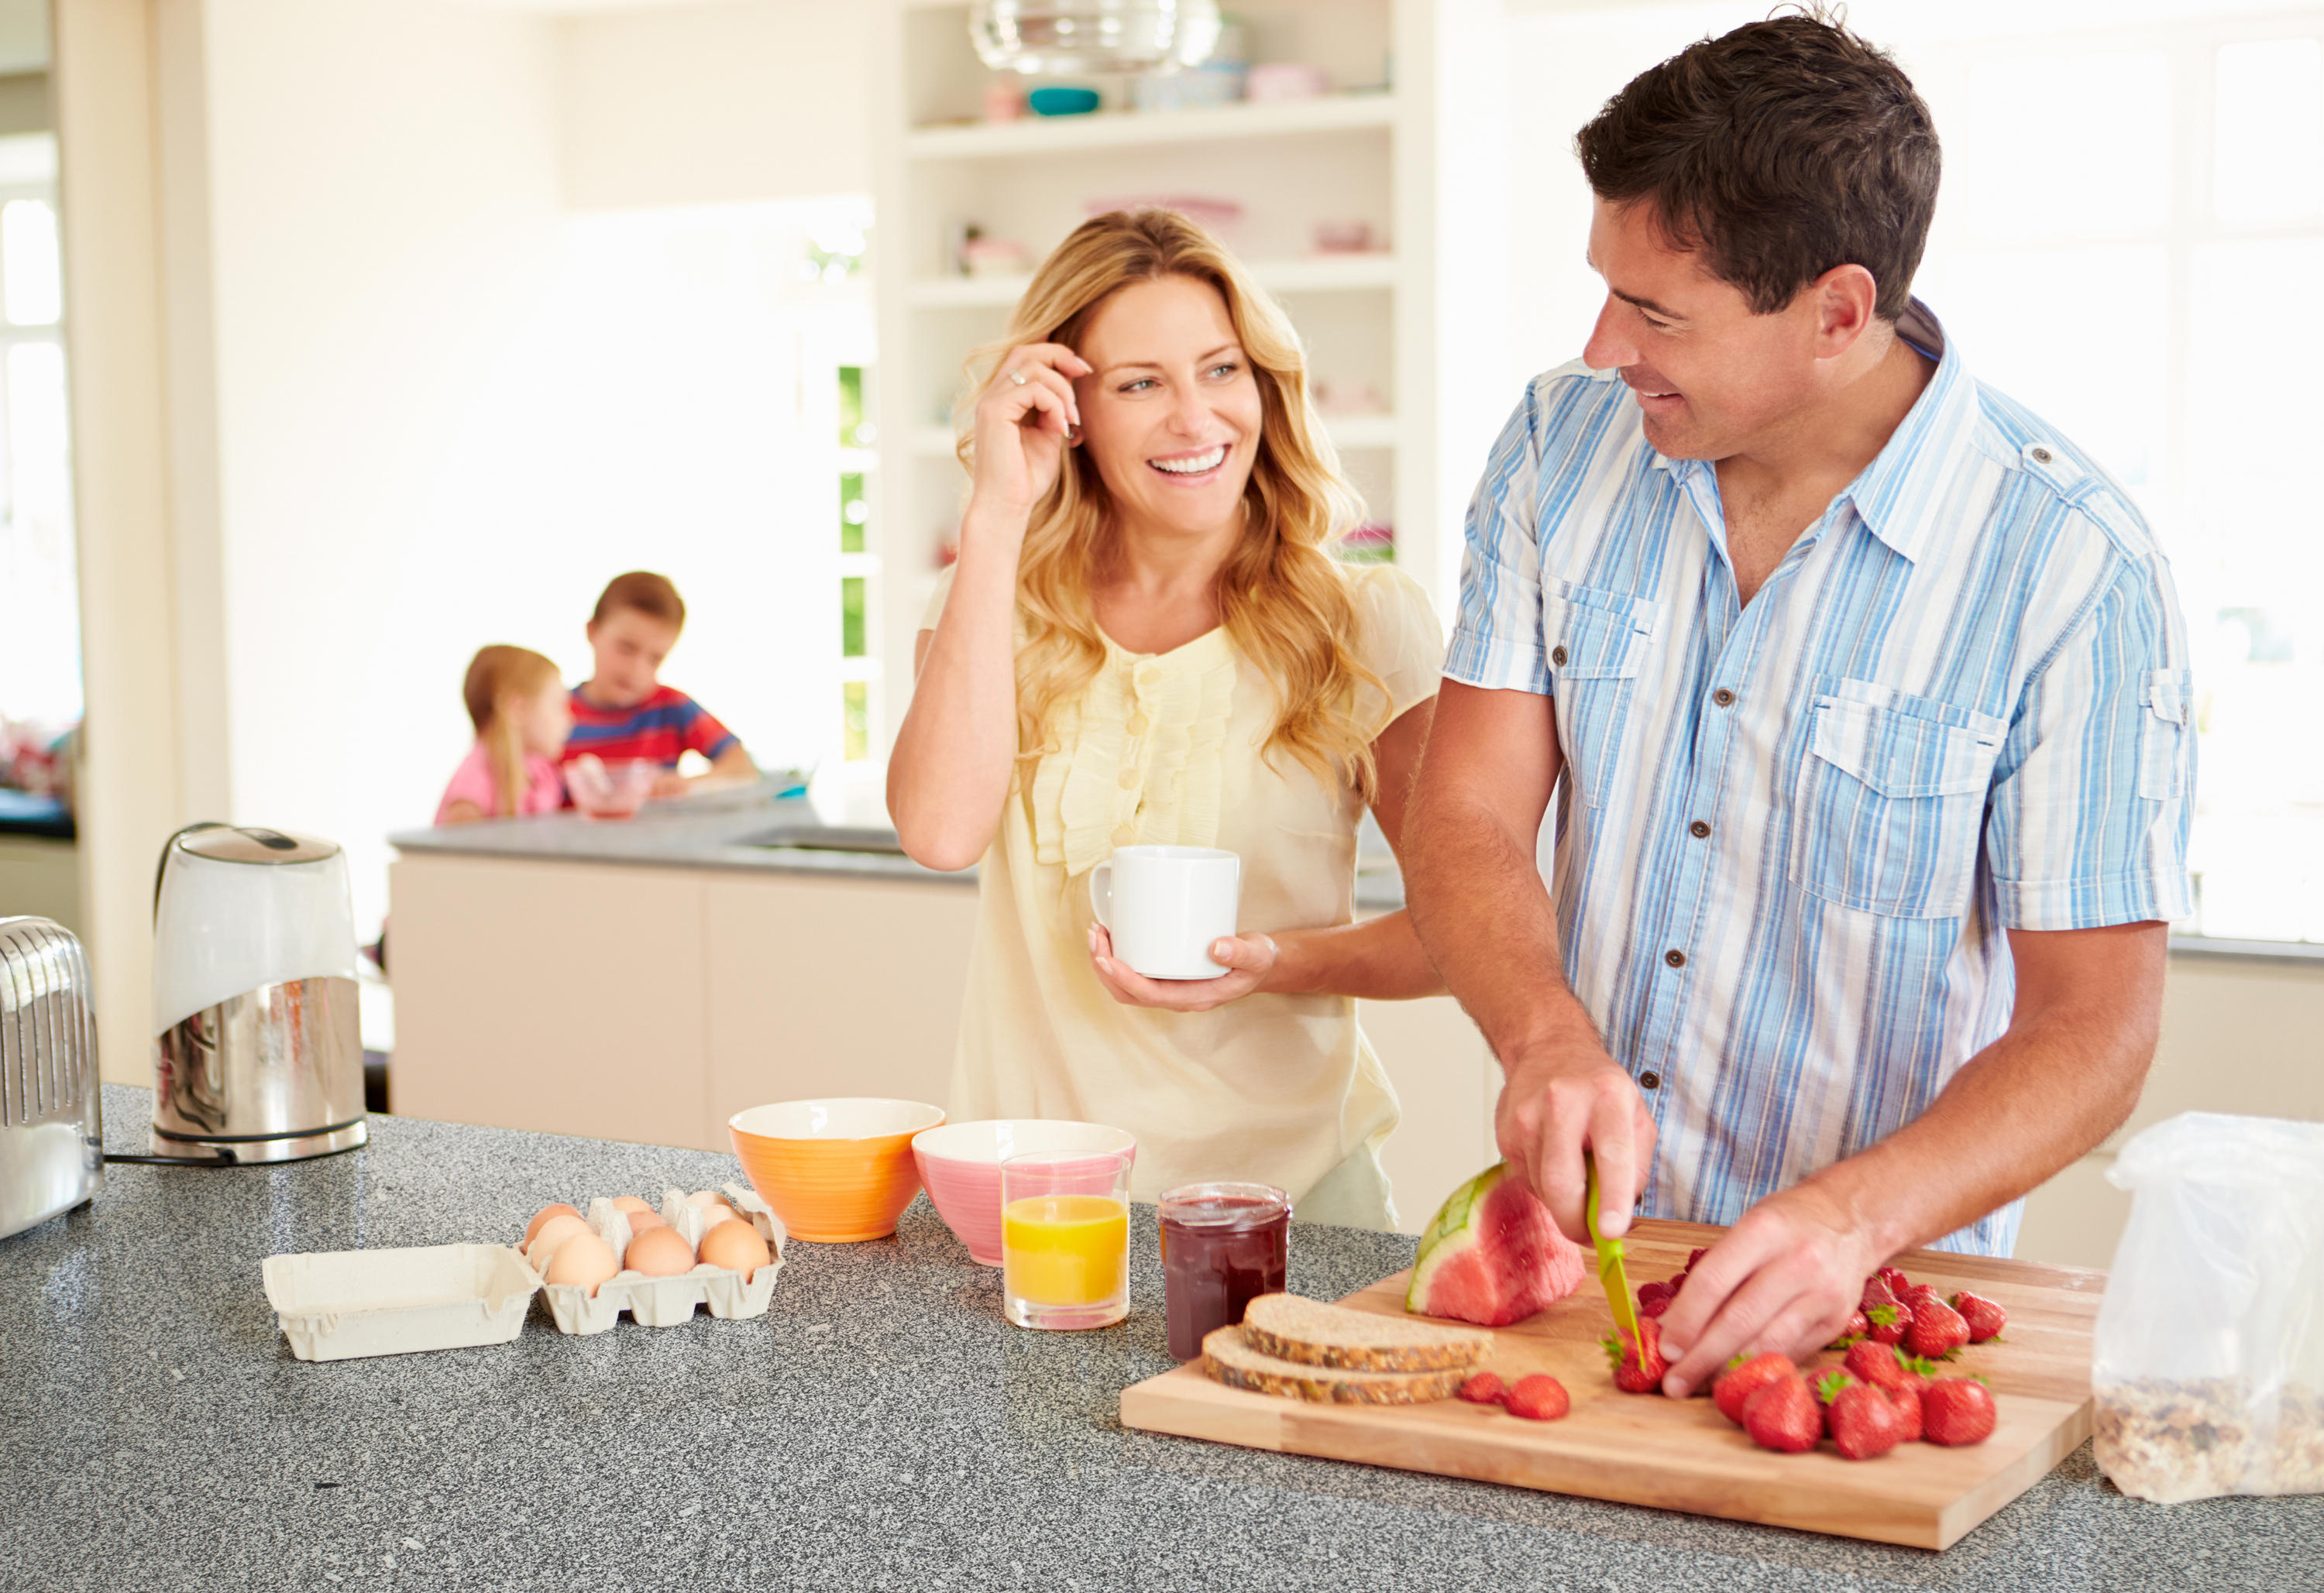 Wife together. Семья на кухне. Мужчина и женщина завтракают. Счастливая семья на кухне. Семья кухня обед.